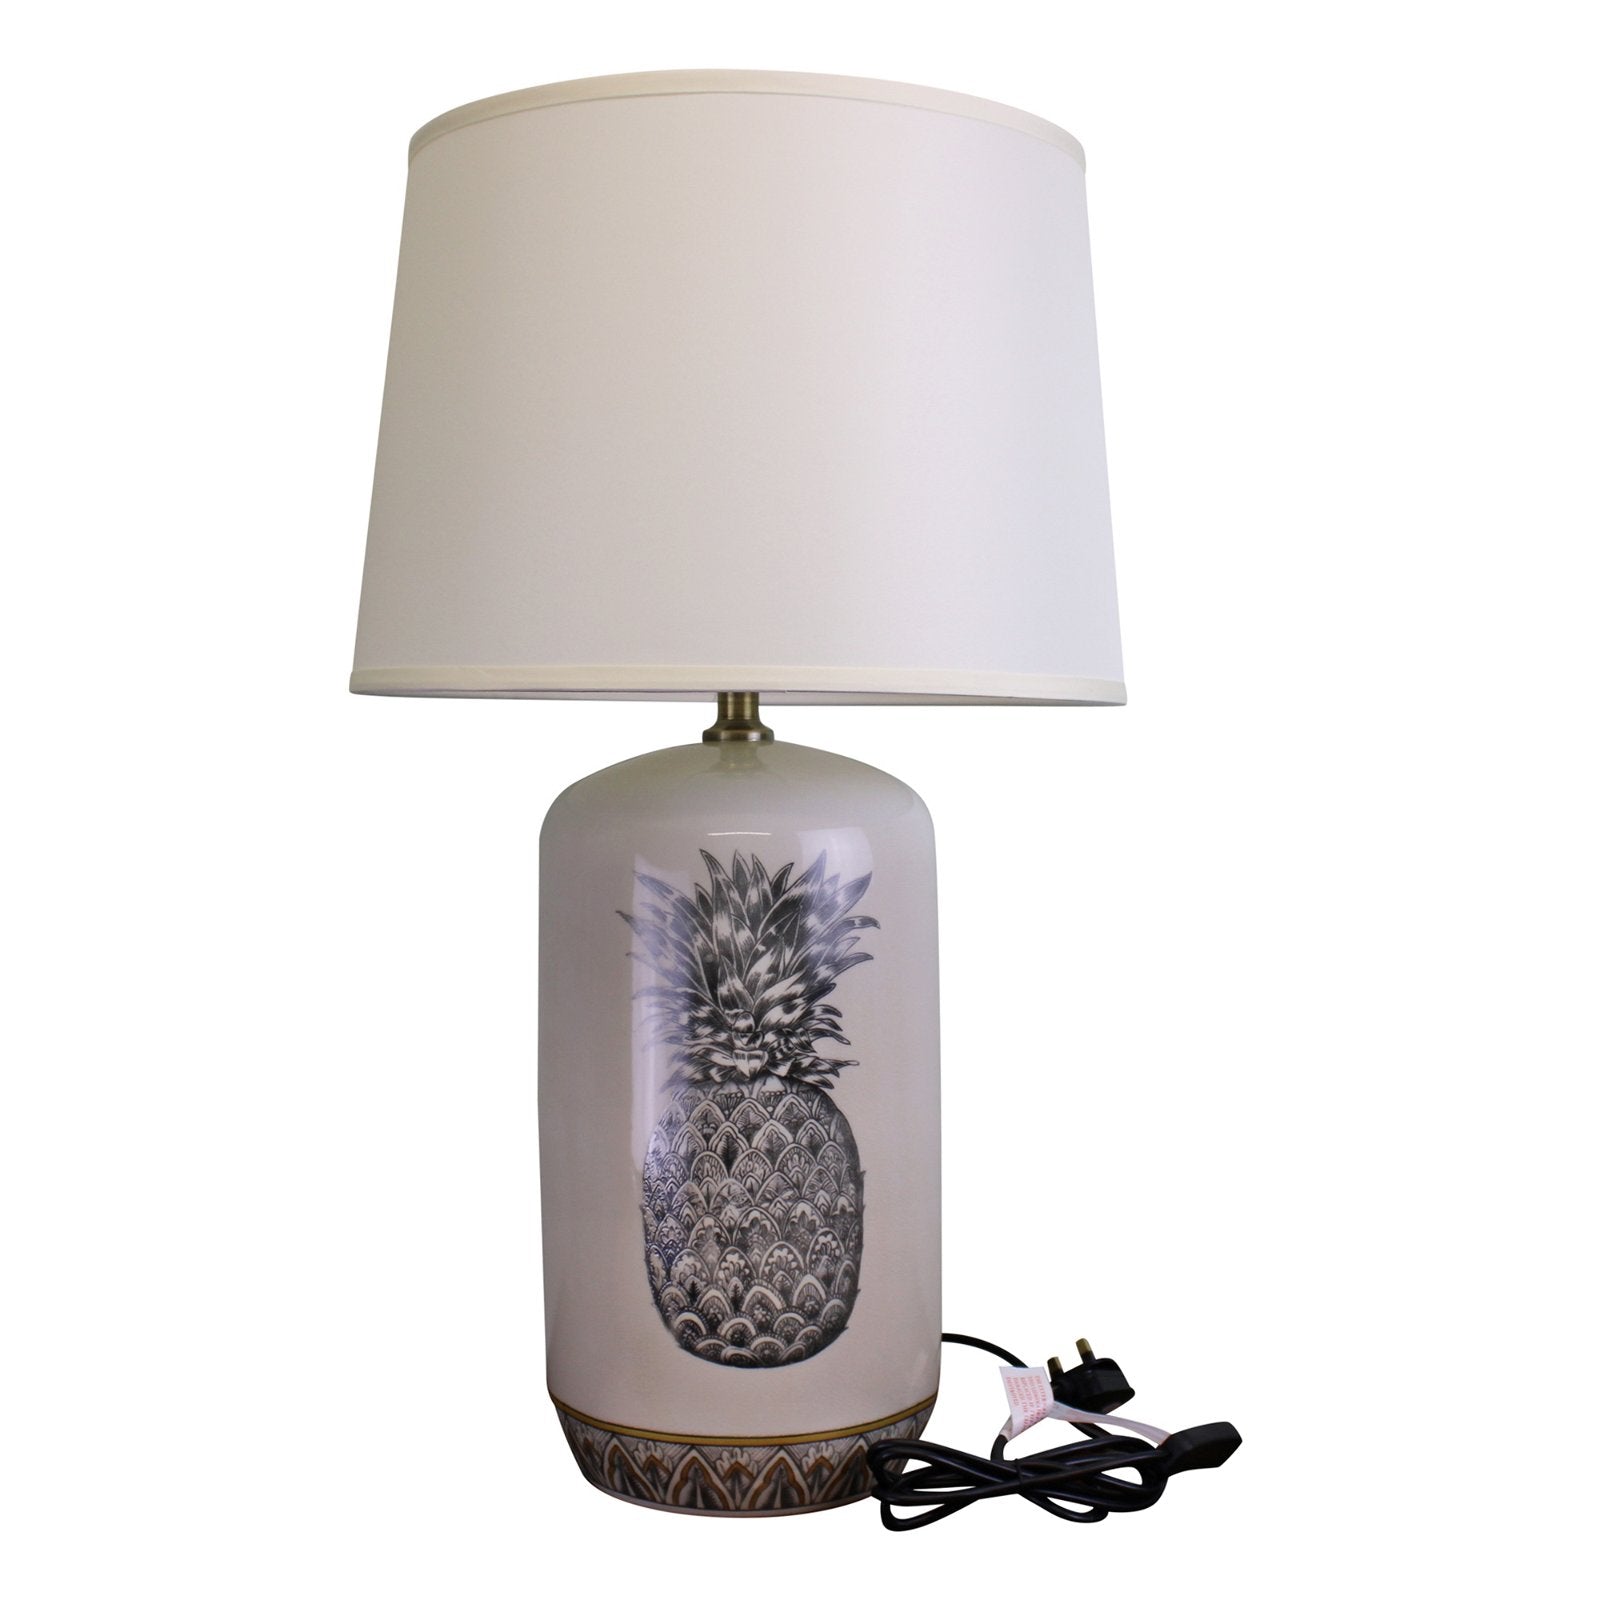 Black & White Ceramic Lamp with Pineapple Design 69cm - Kaftan direct